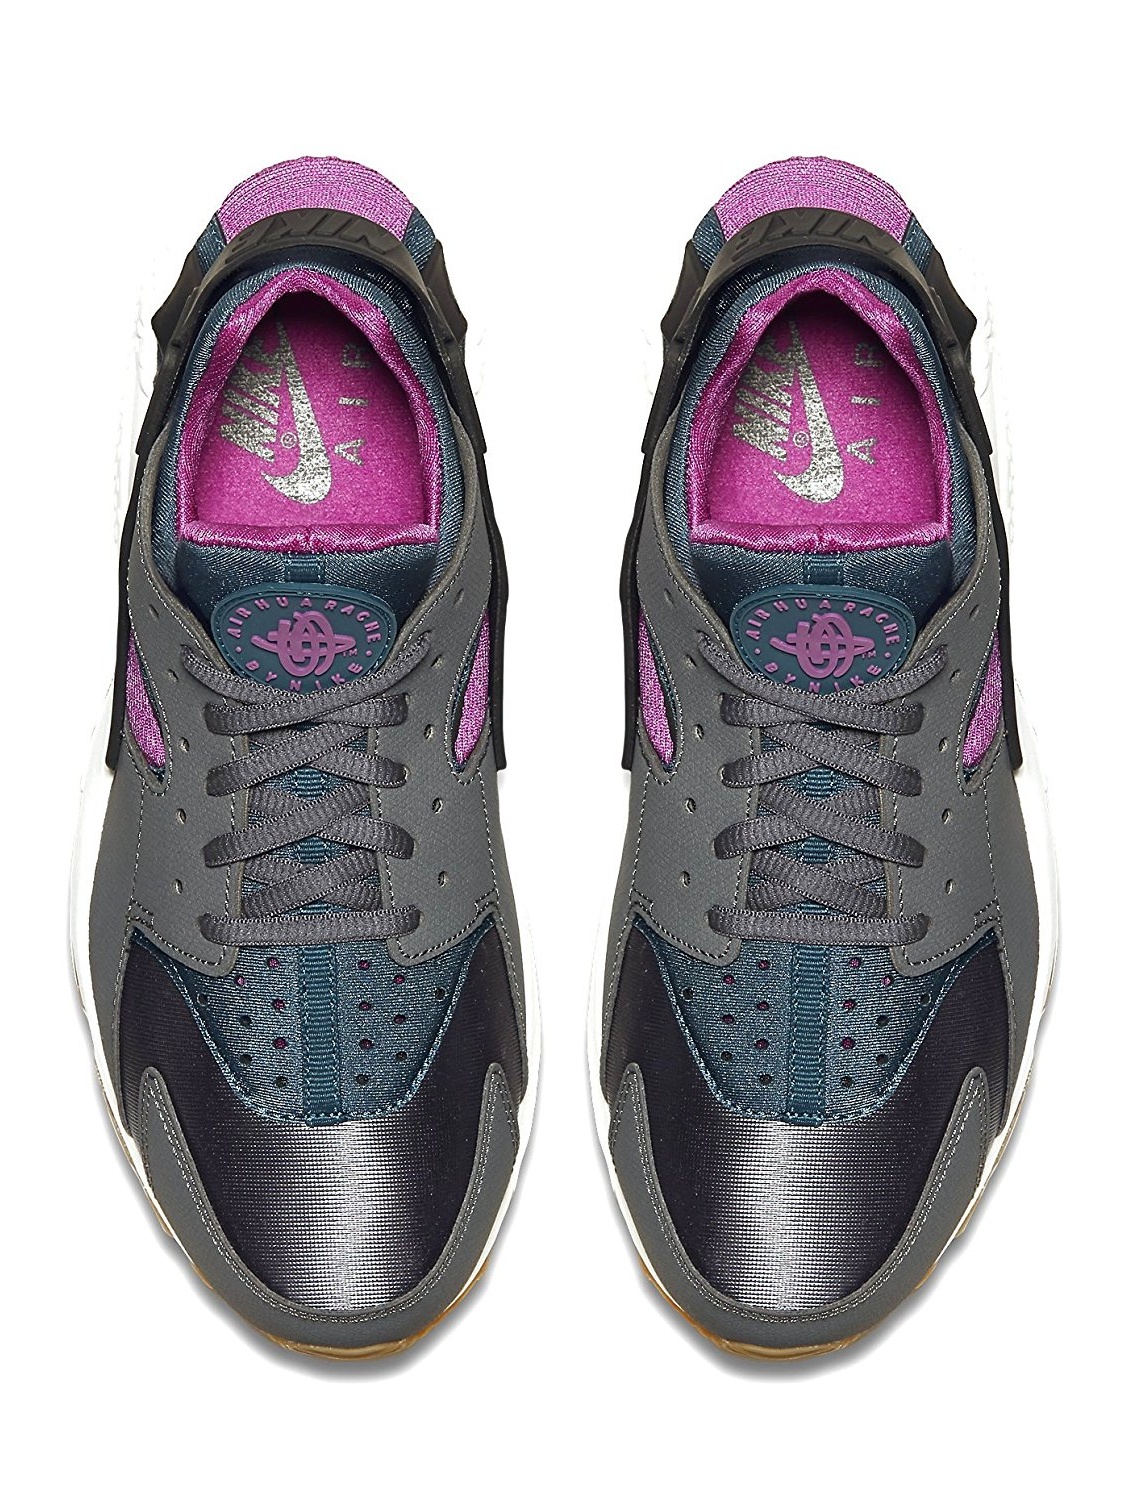 Nike Women's Air Huarache Run Running Shoe-Dark Grey/Teal/Violet - image 4 of 5